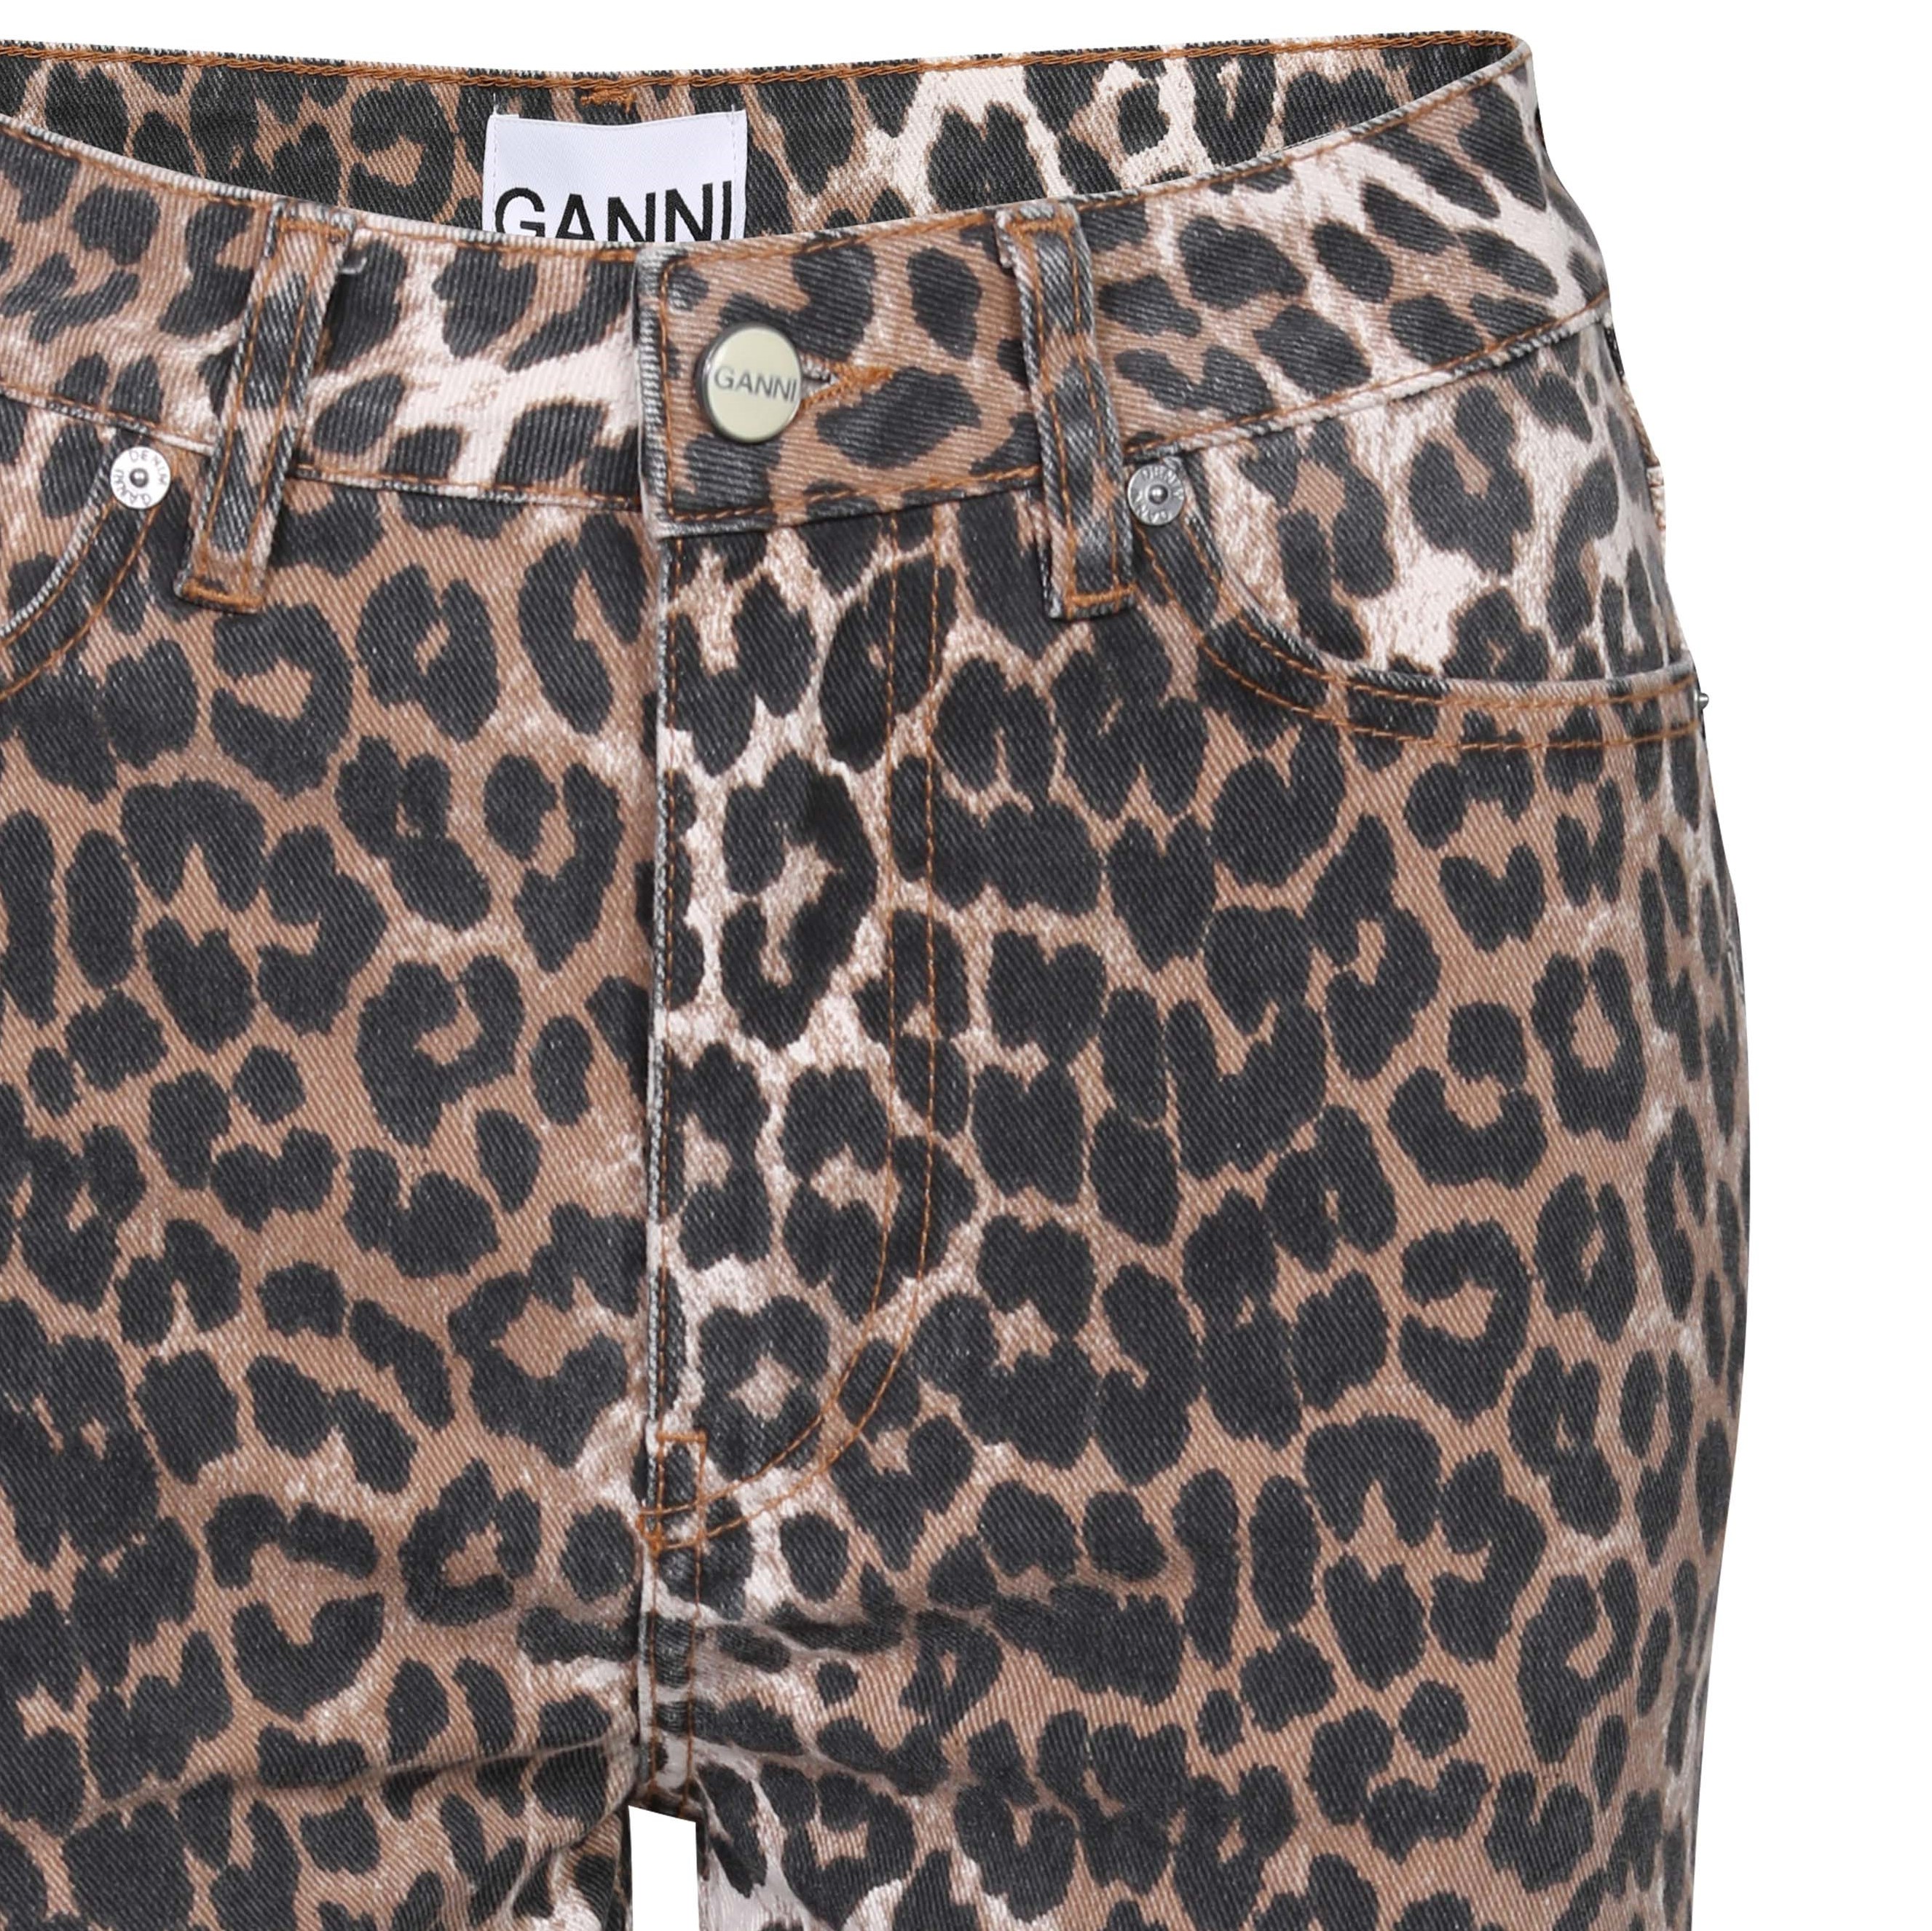 Ganni Knee Length Denim Shorts in Leopard 28